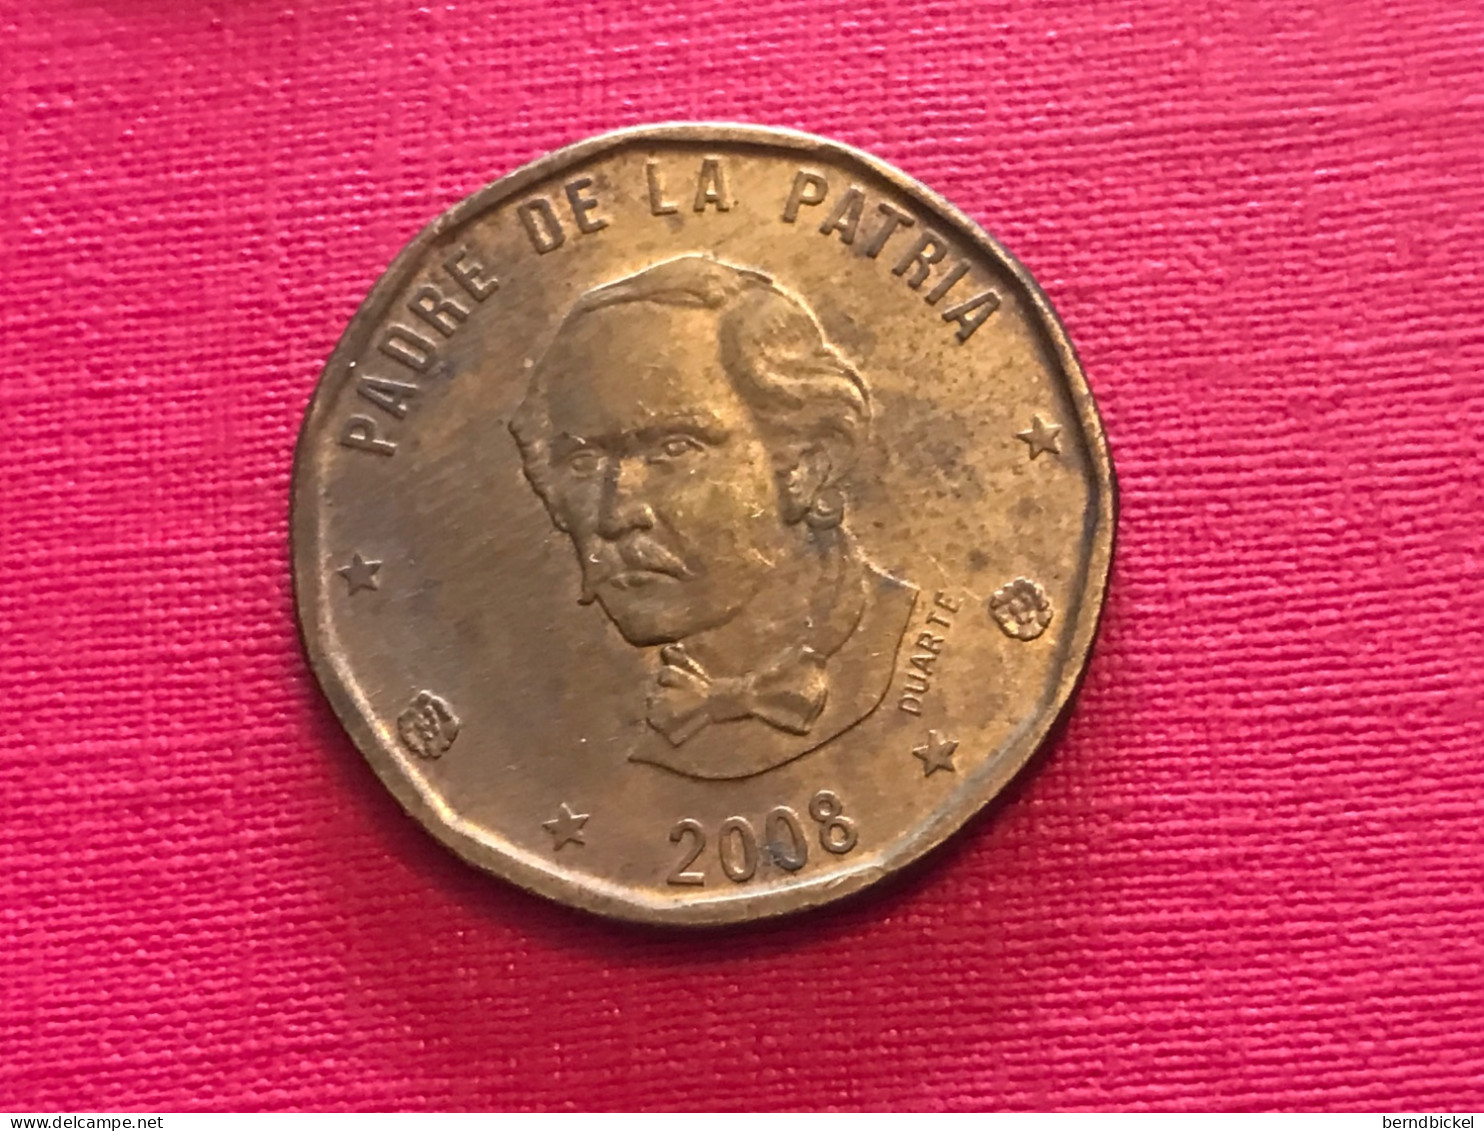 Münze Münzen Umlaufmünze Dominikanische Republik 1 Peso 2008 - Dominikanische Rep.